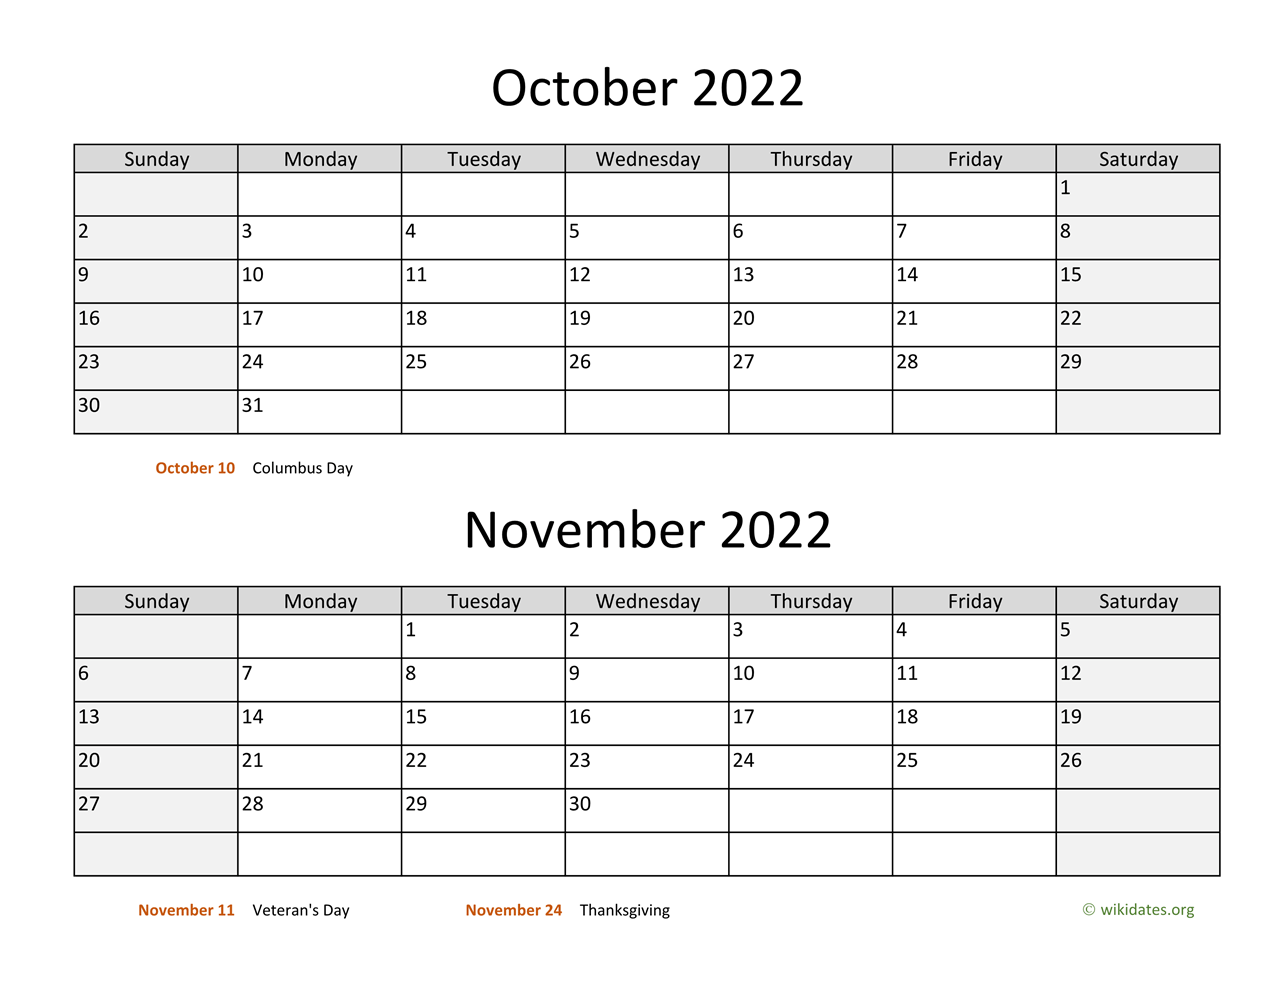 October November 2022 Calendar October And November 2022 Calendar | Wikidates.org